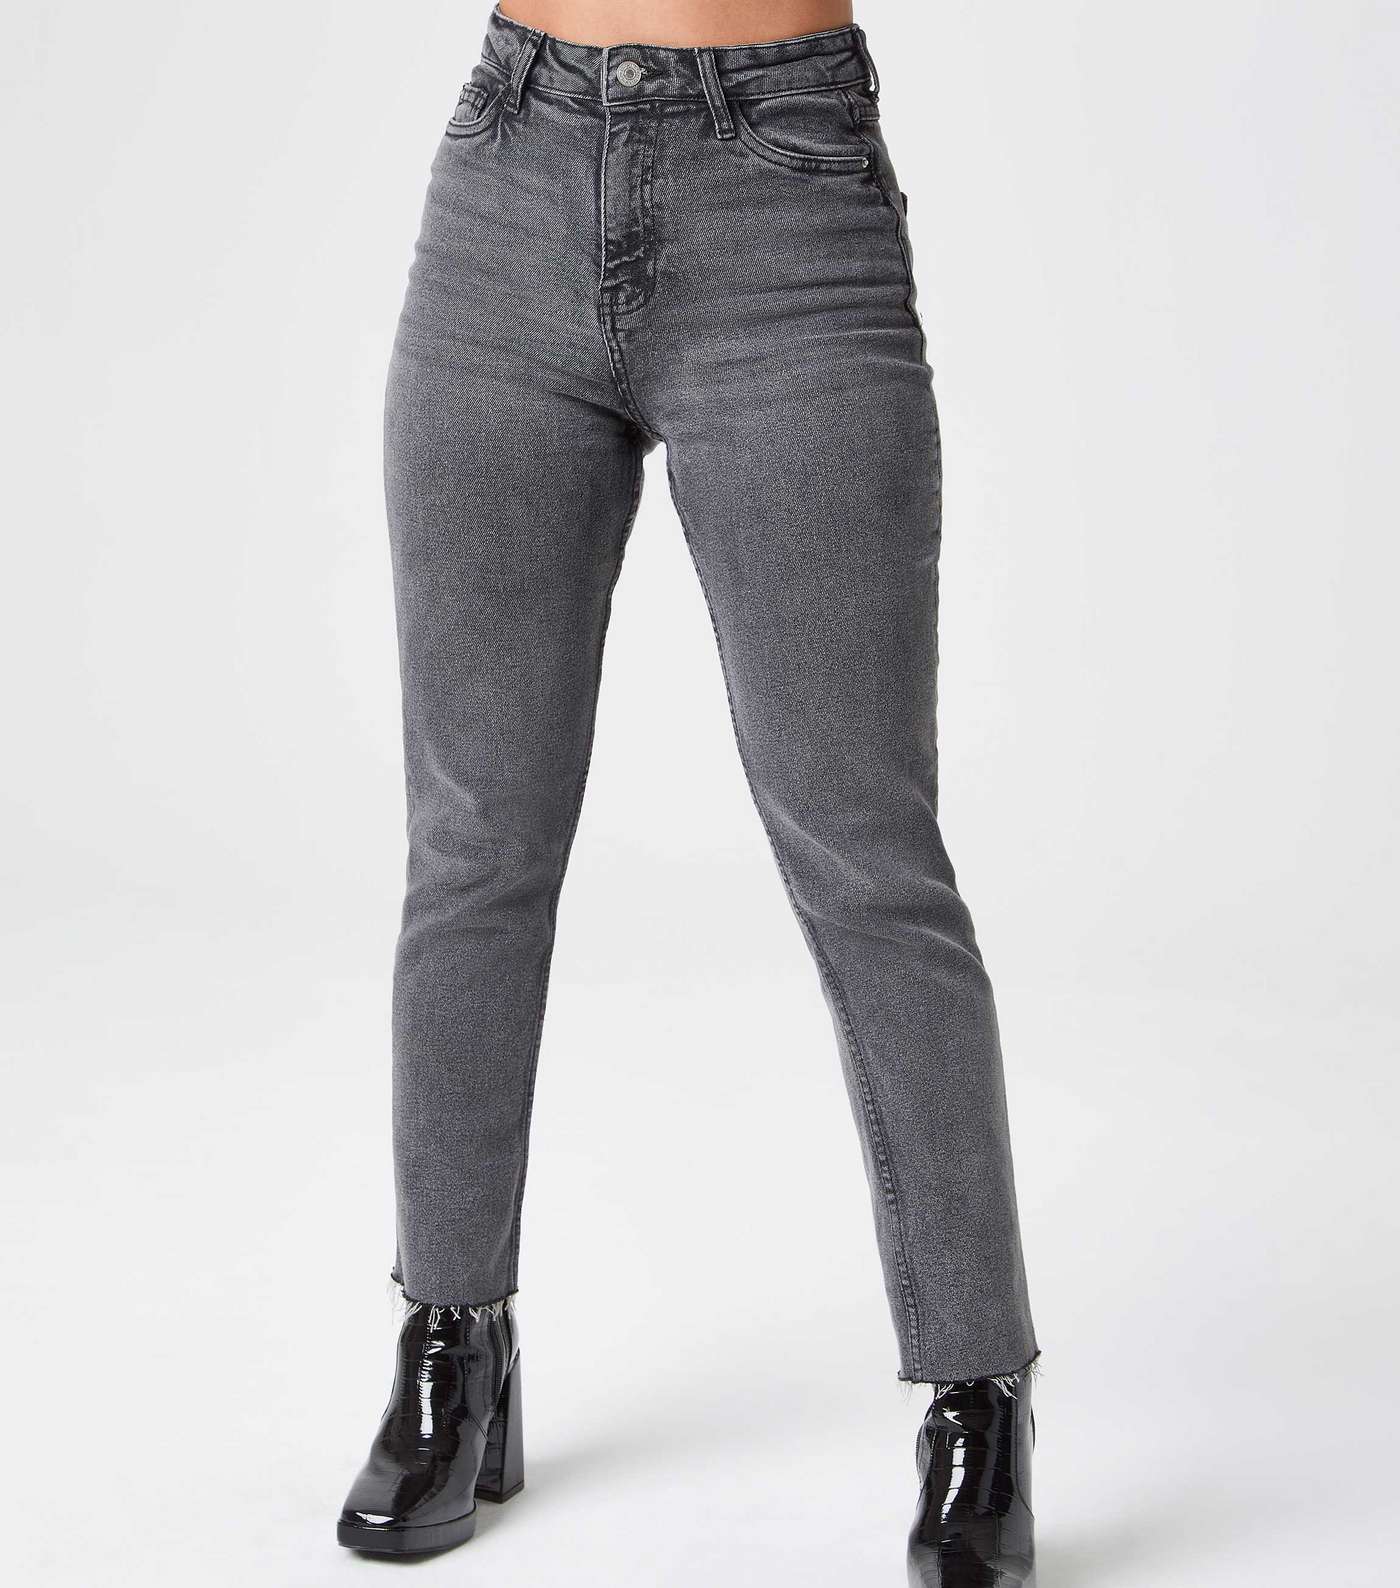 Urban Bliss Dark Grey Straight Leg Jeans  Image 2